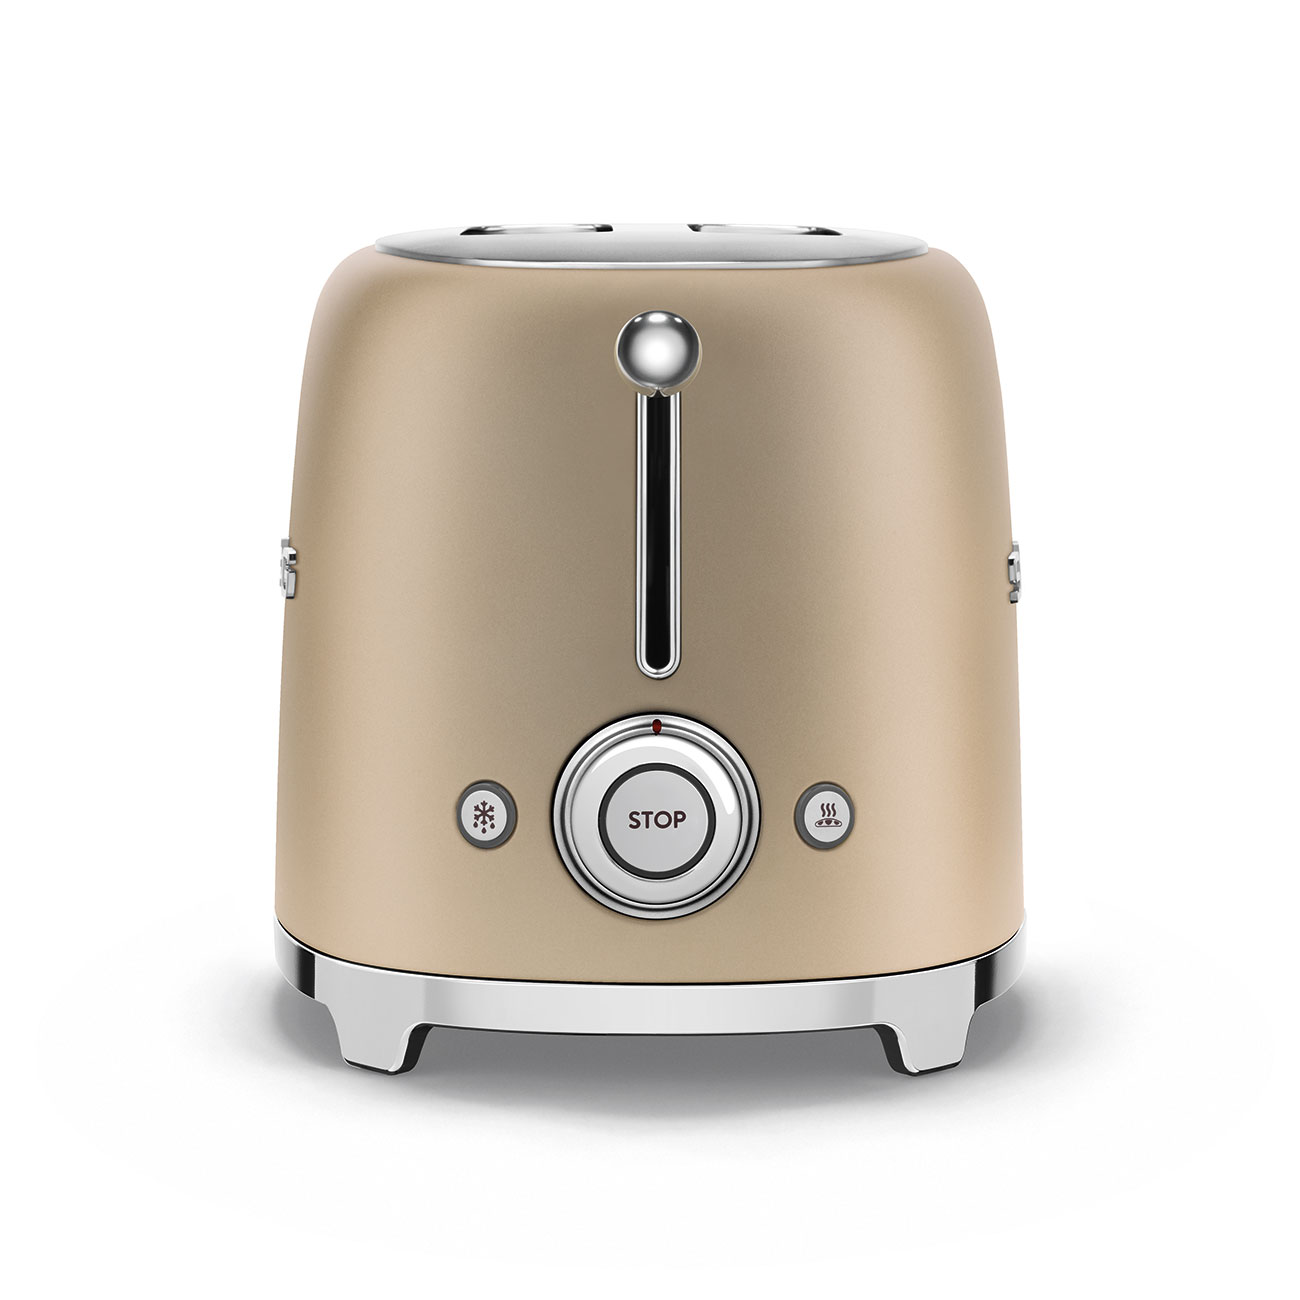 Smeg 50s Style 2 slice toaster - Gold